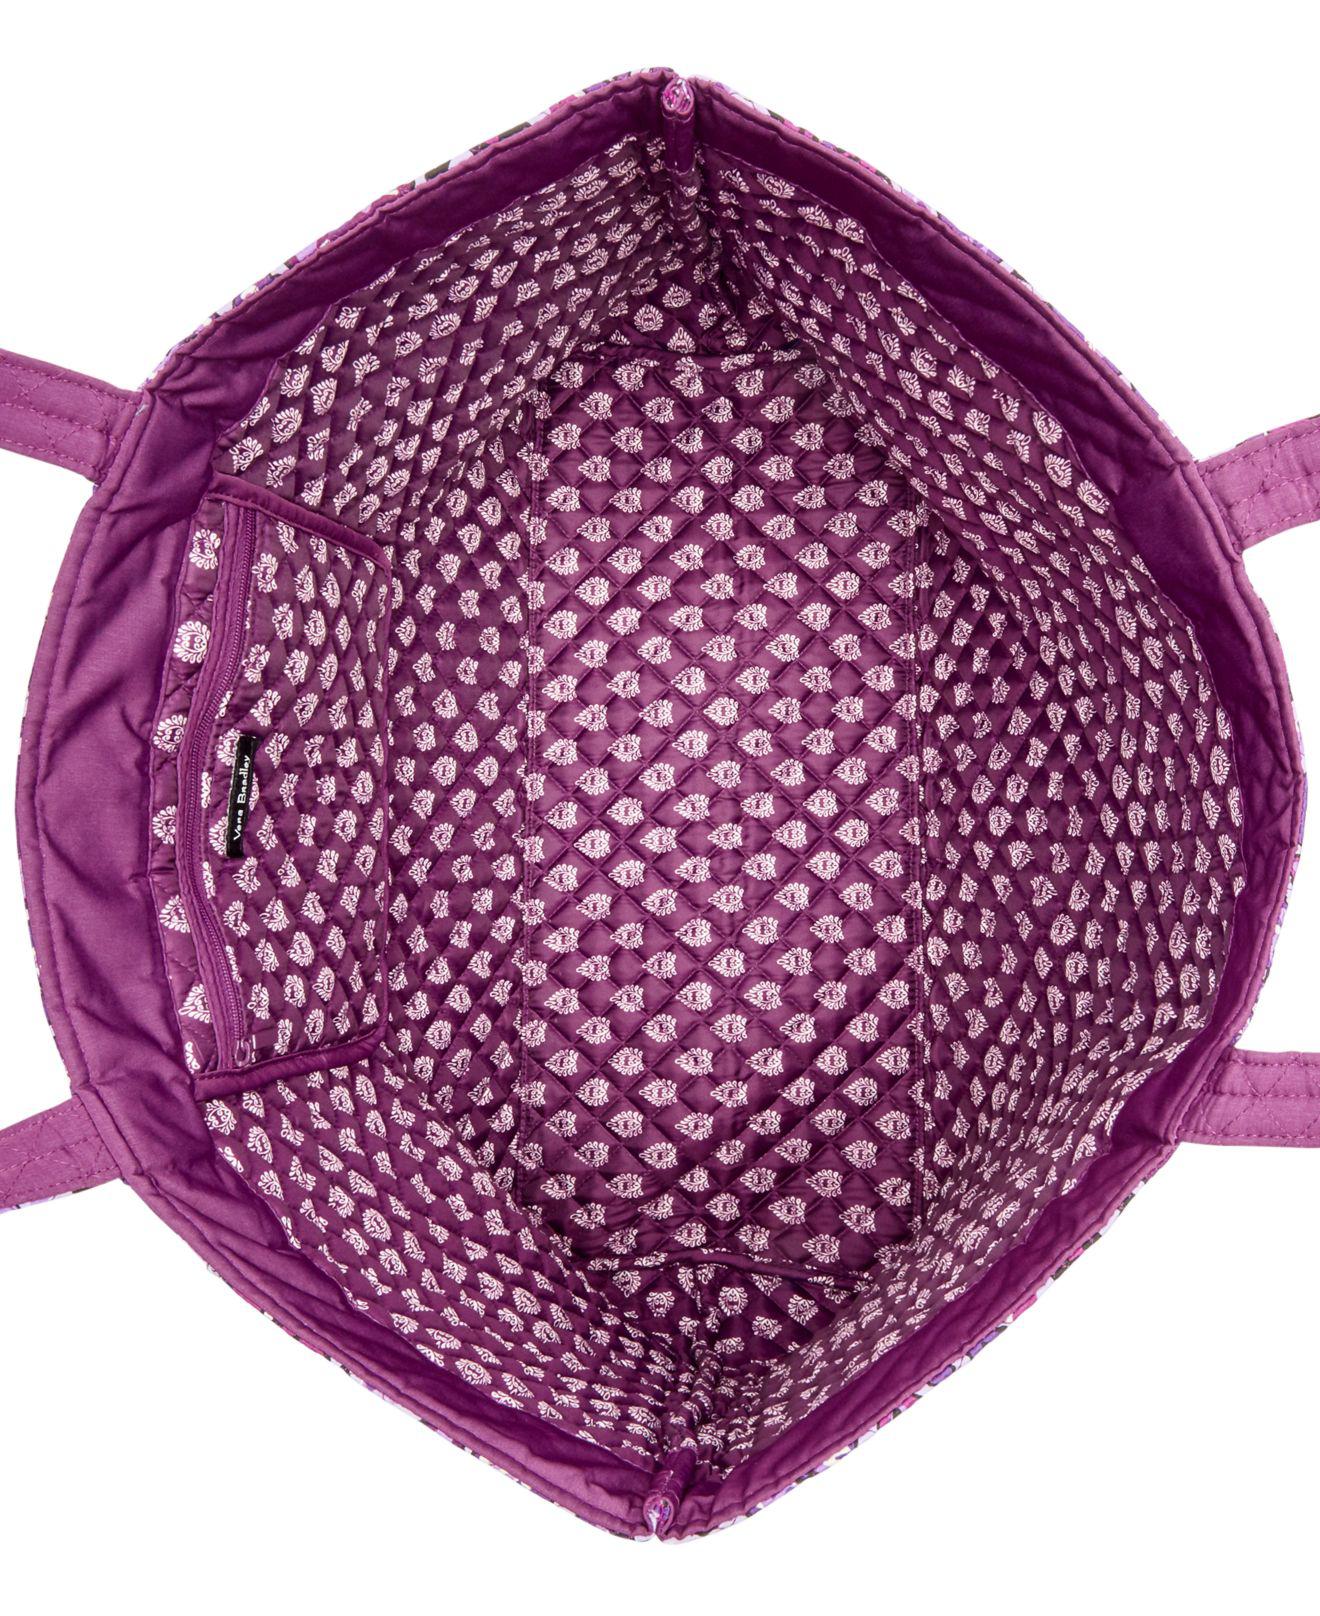 Vera Bradley Large Purple Floral Quilted Fabric Purse Bag | Fabric purses,  Purple floral, Fashion